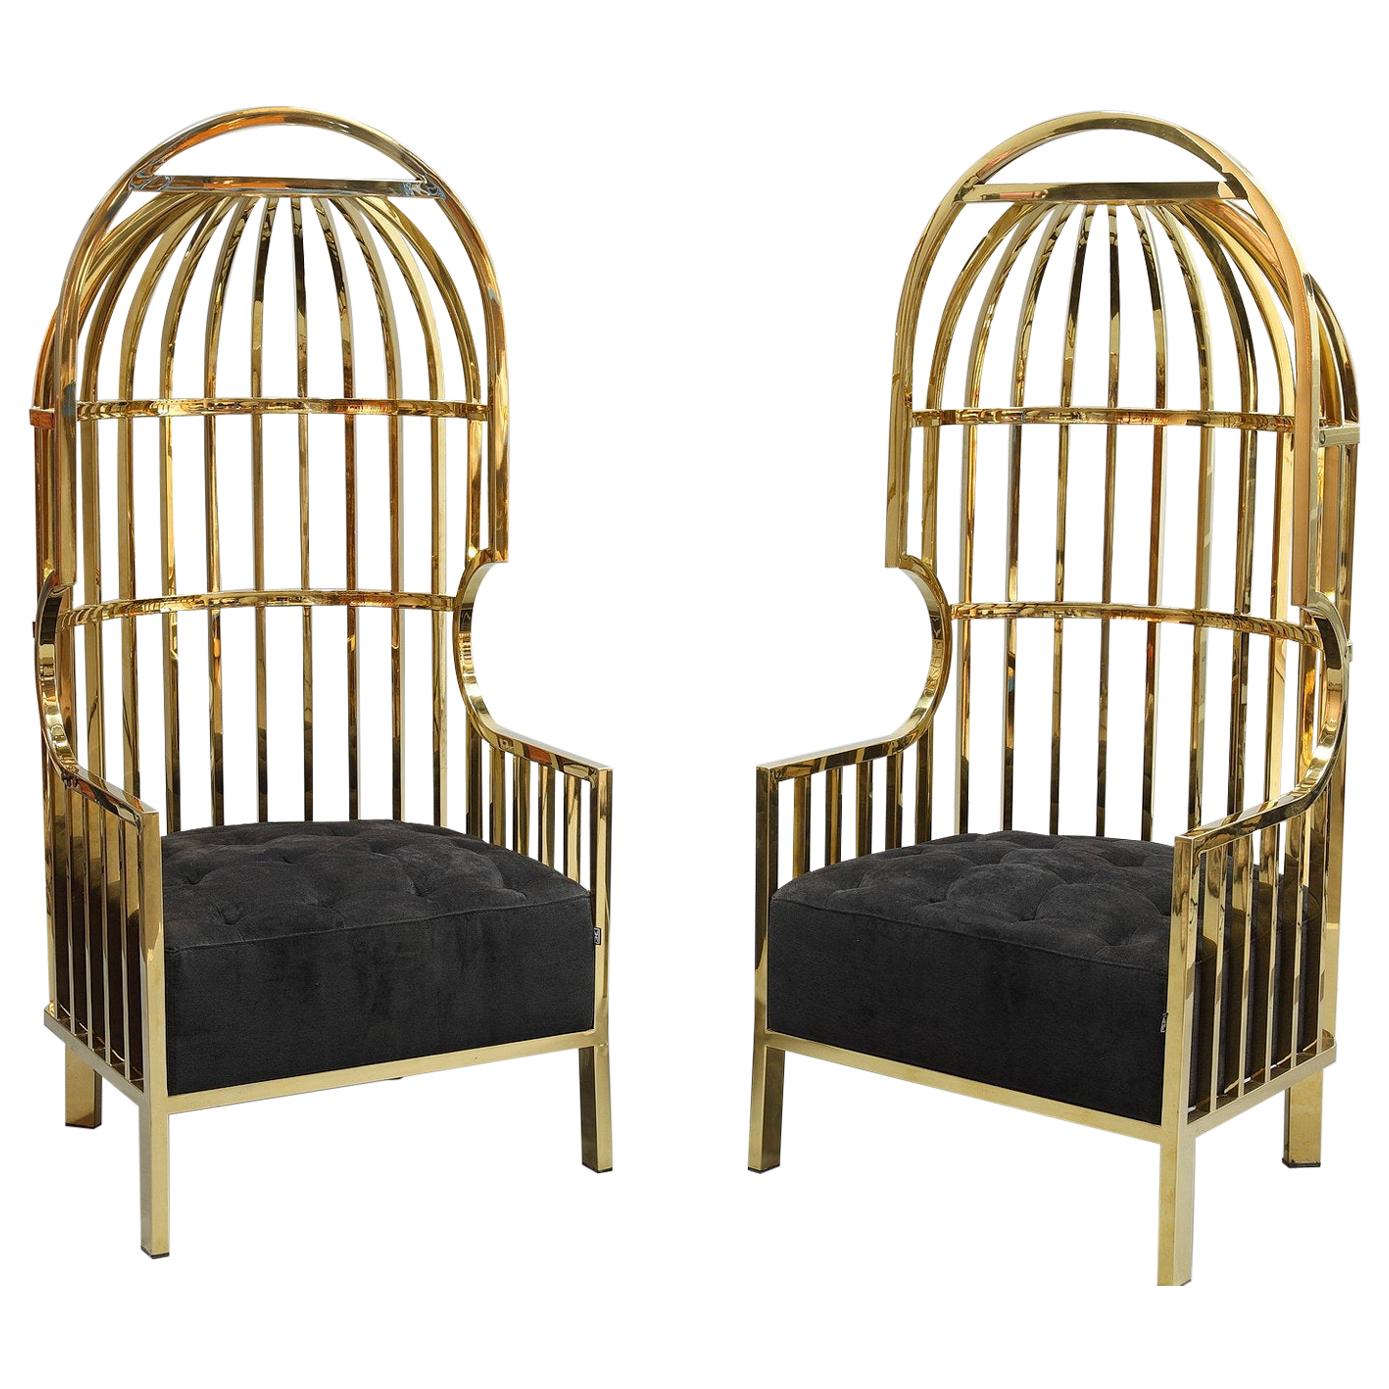 Eichholtz Bora Bora Birdcage Chairs, Gold